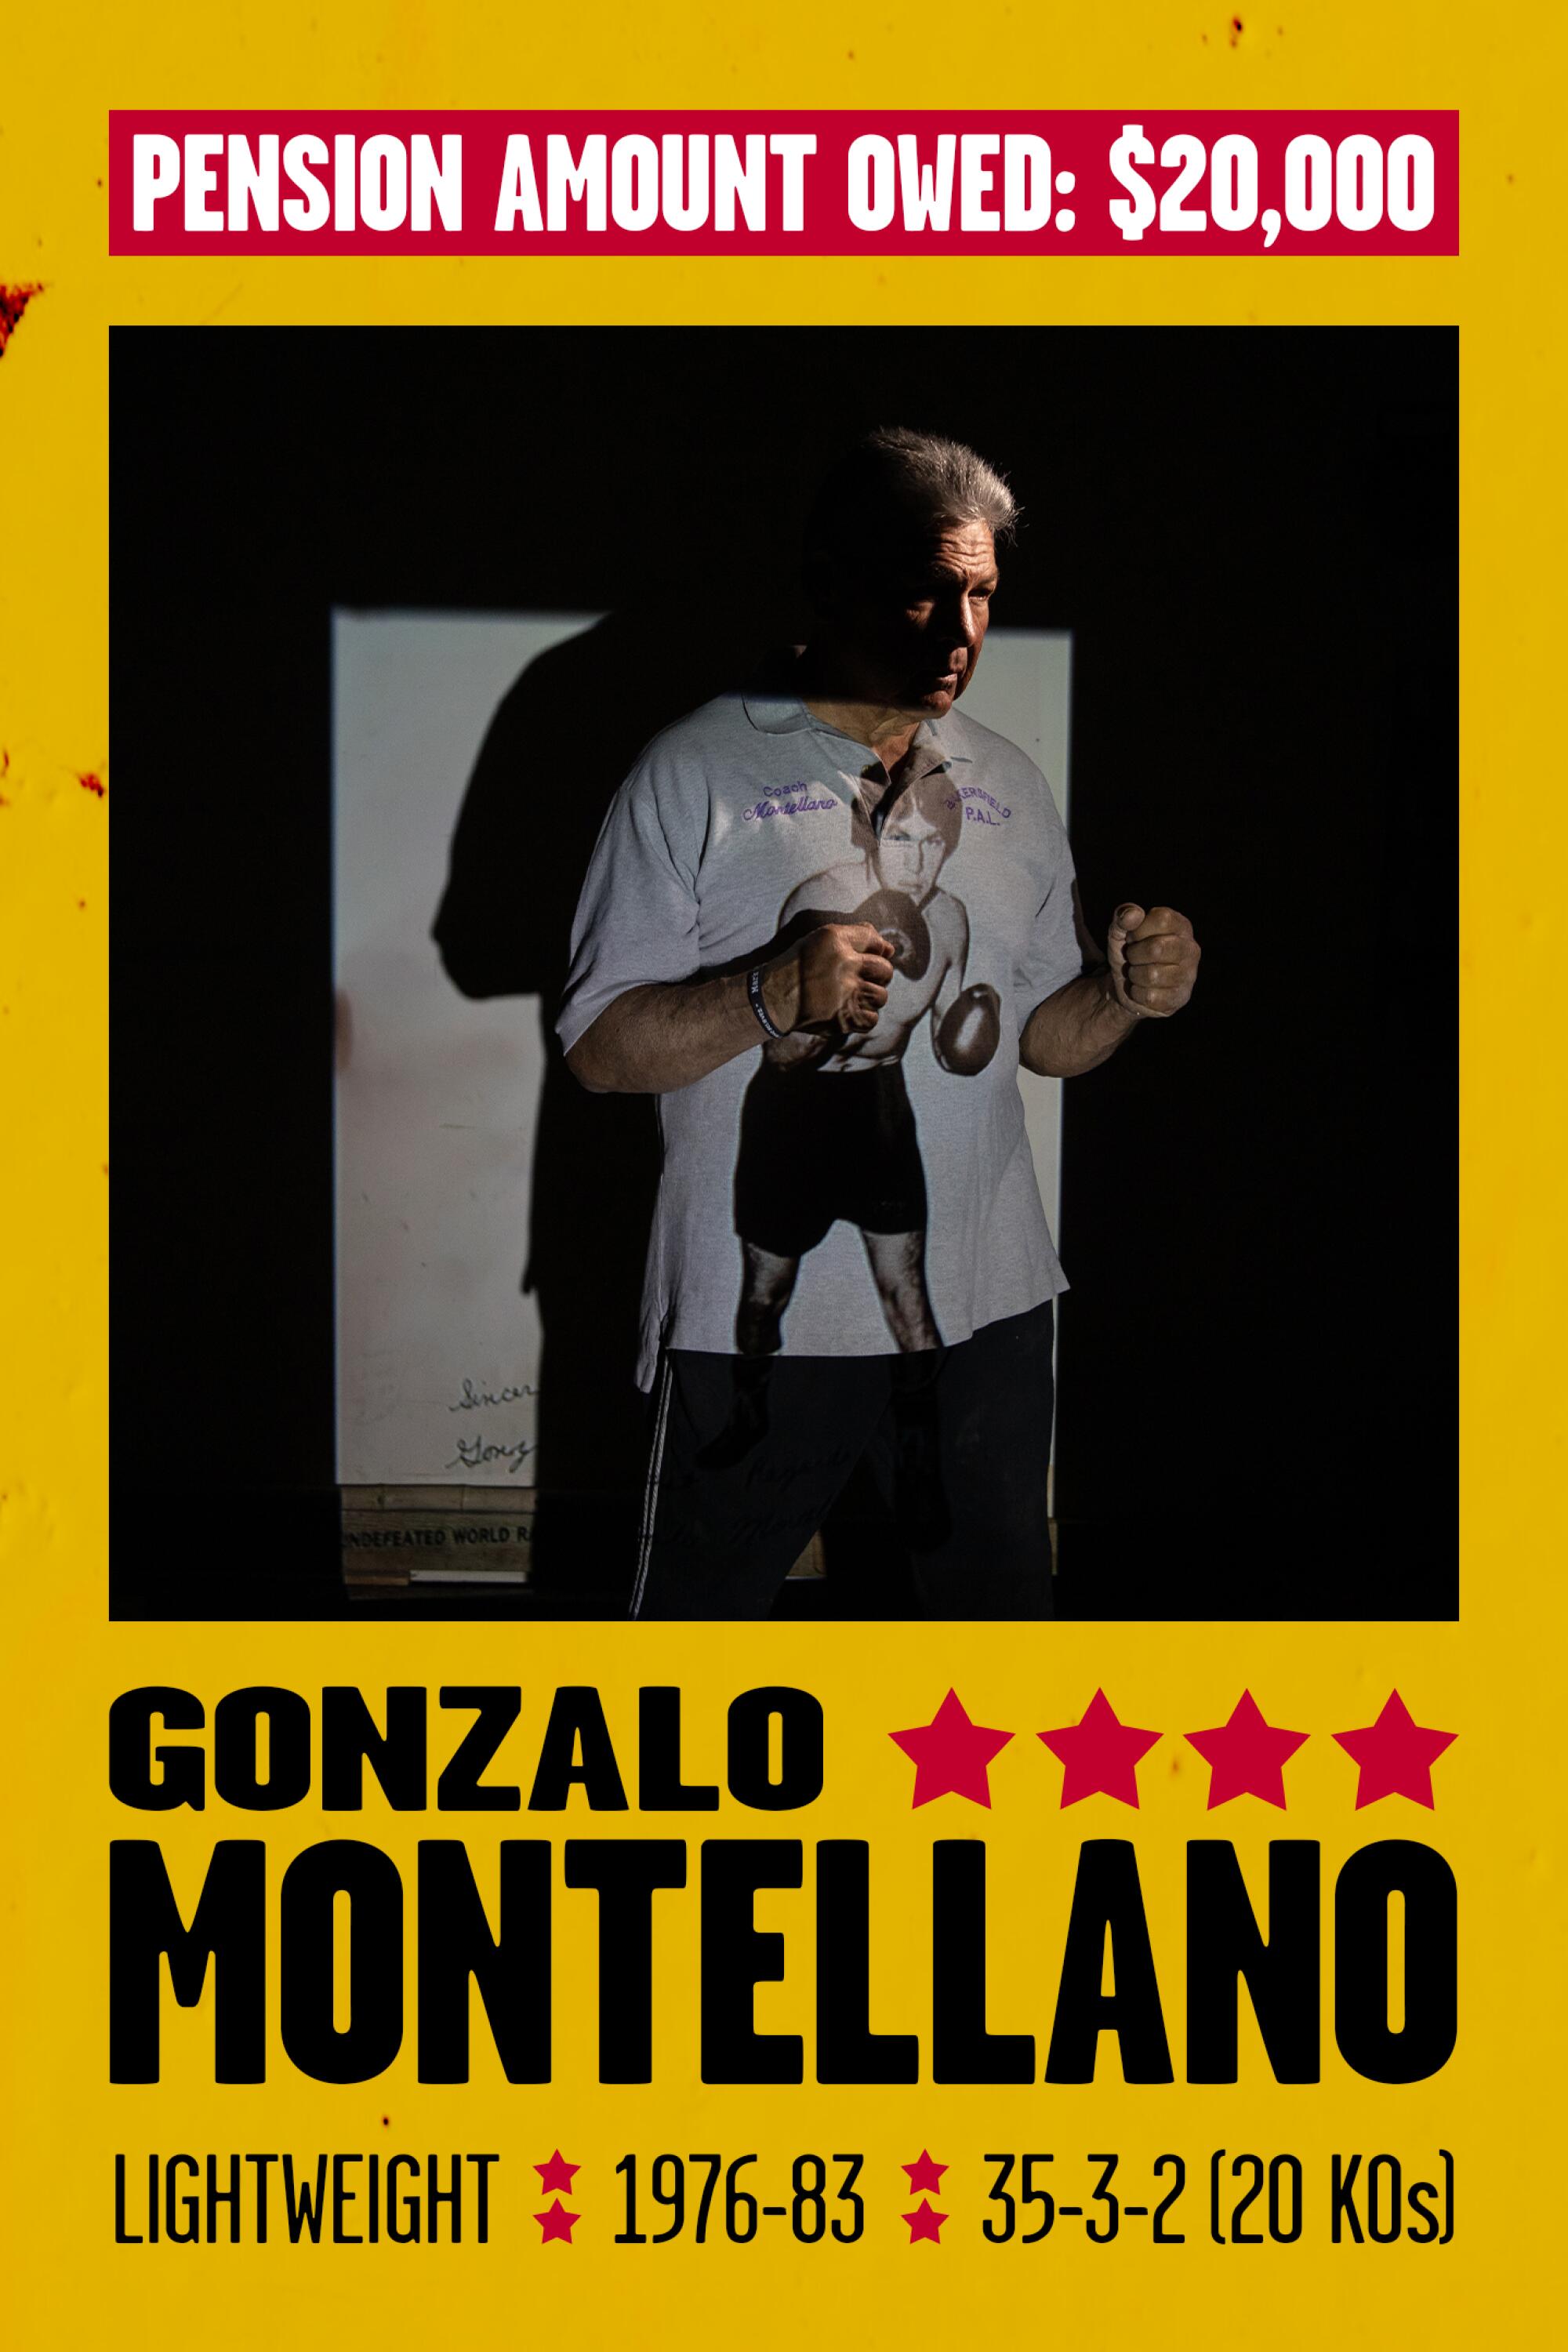 Fight poster: GONZALO MONTELLANO, LIGHTWEIGHT, 1976-83, 35-3-2 (20 KOs), PENSION OWED: $20,000